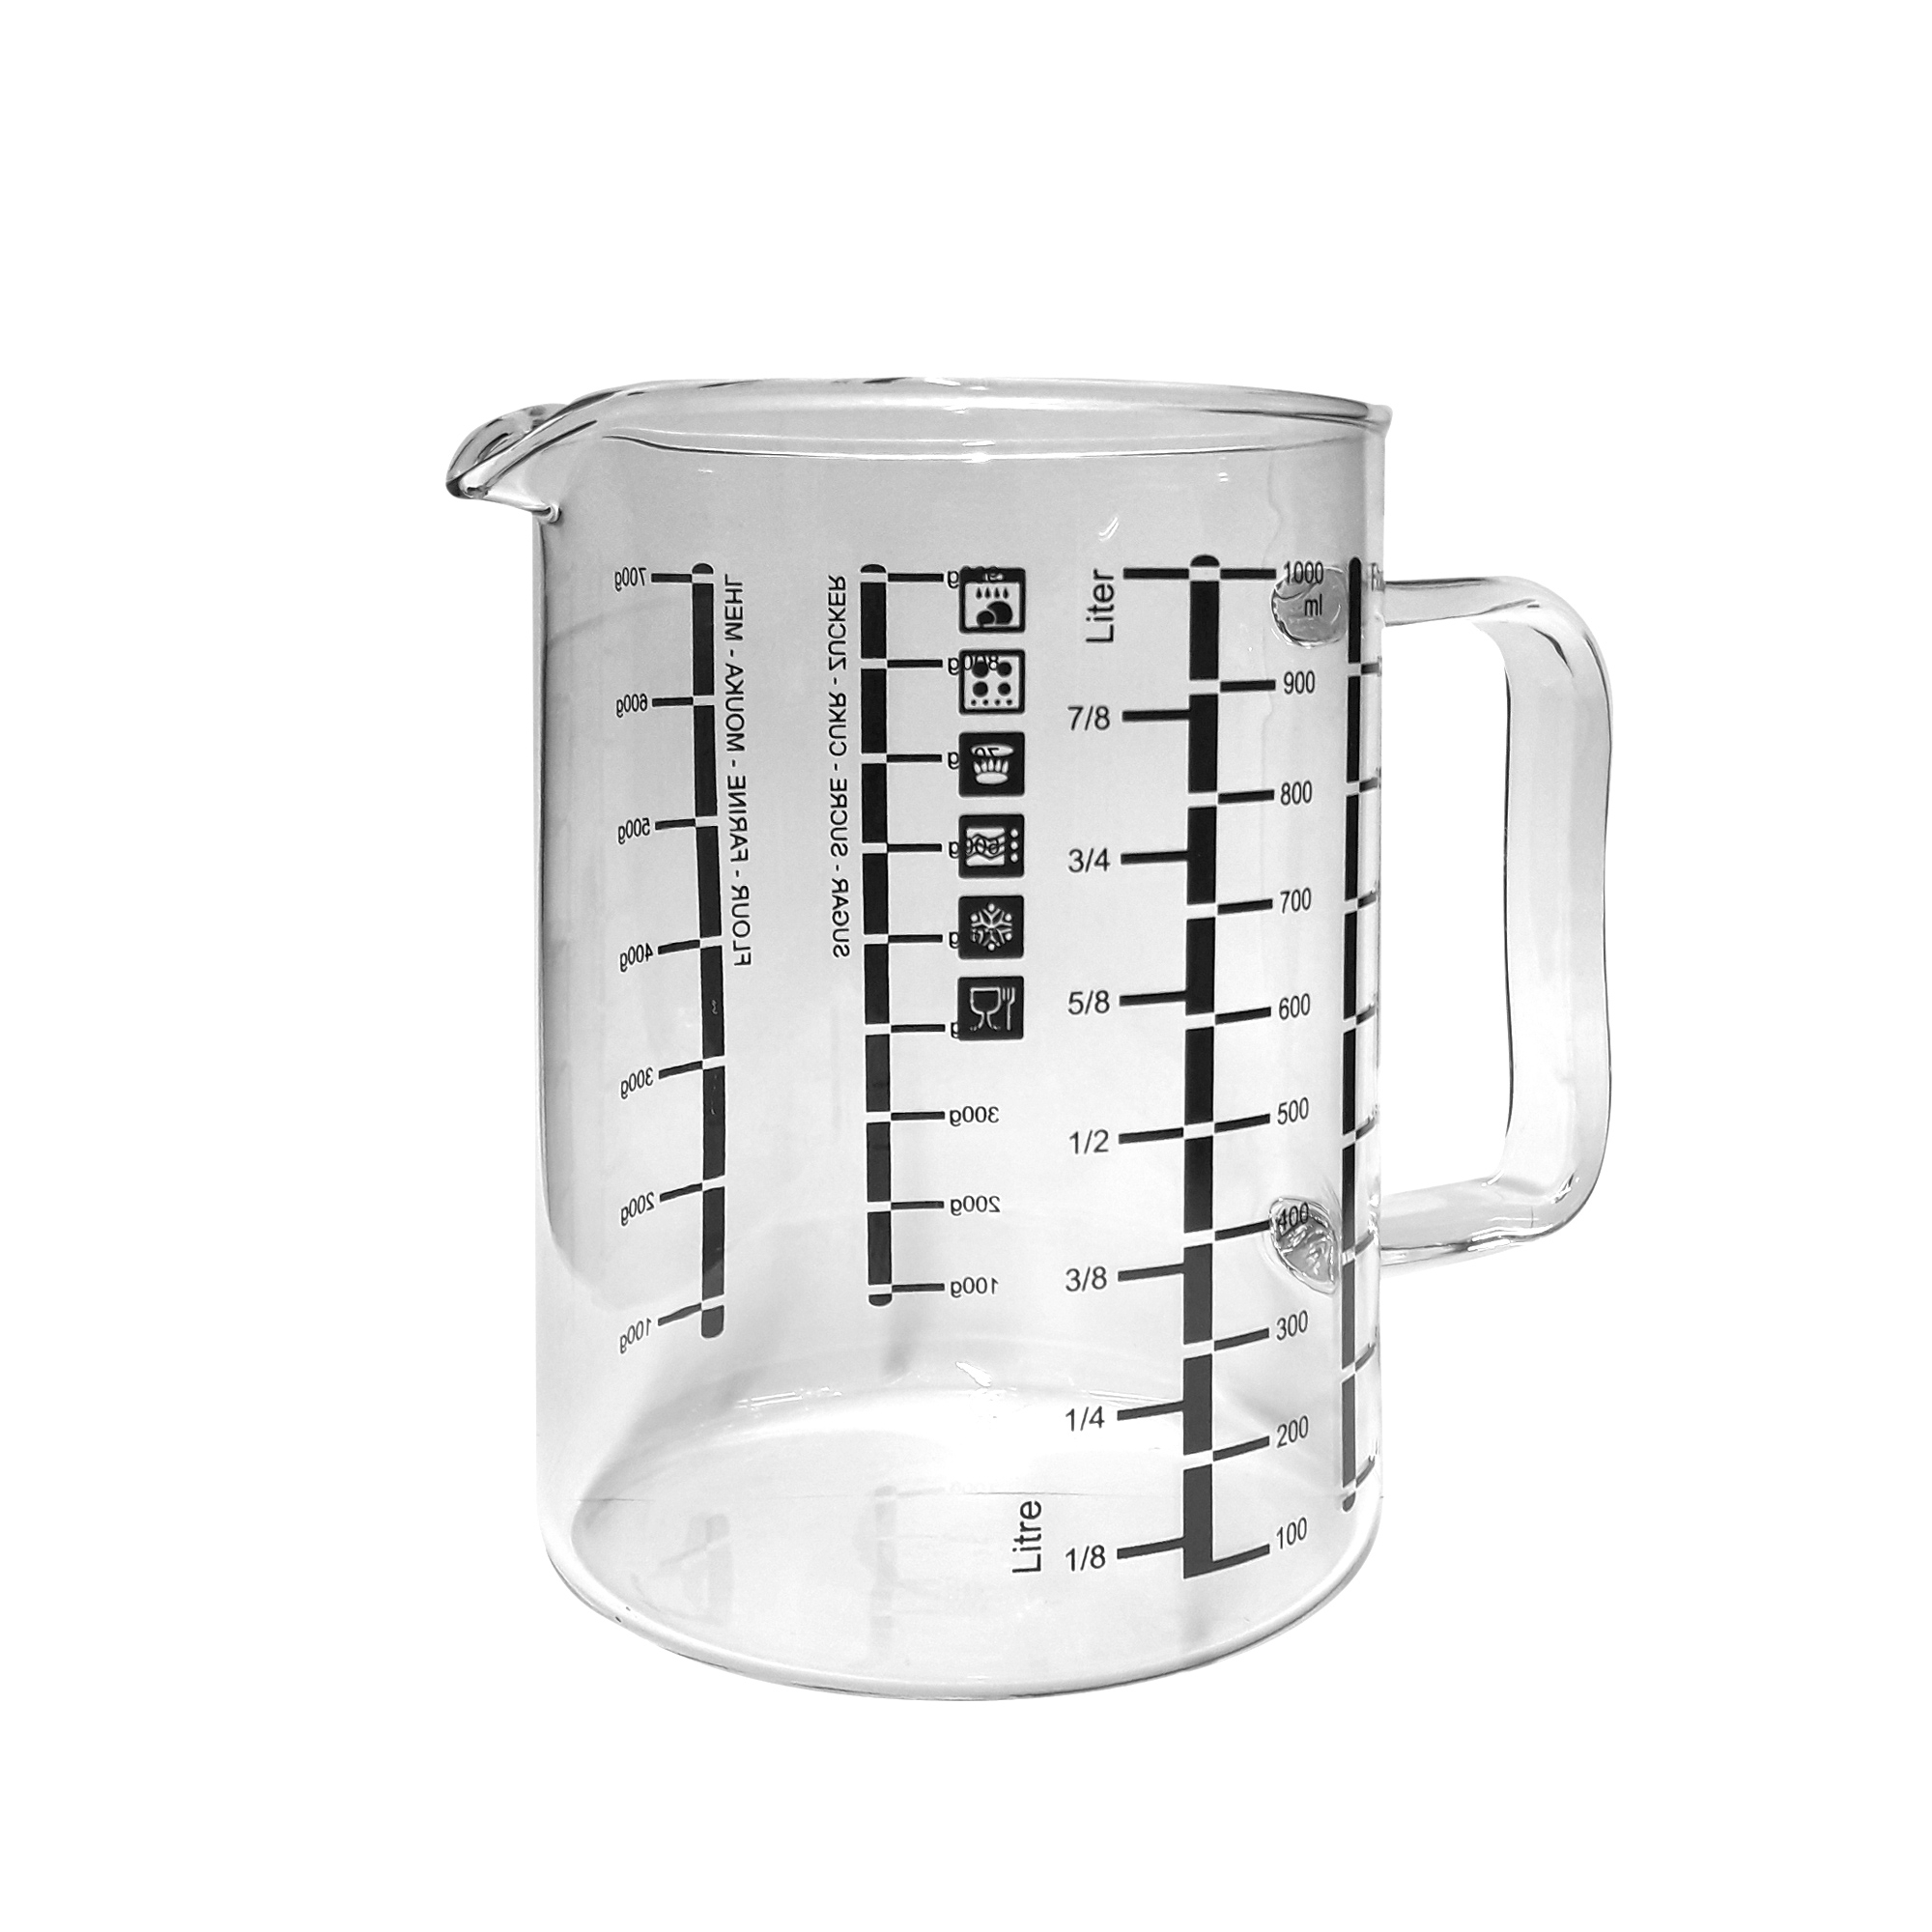 Riess - FASHION GLAS - Küchenmaß 1,0 Liter